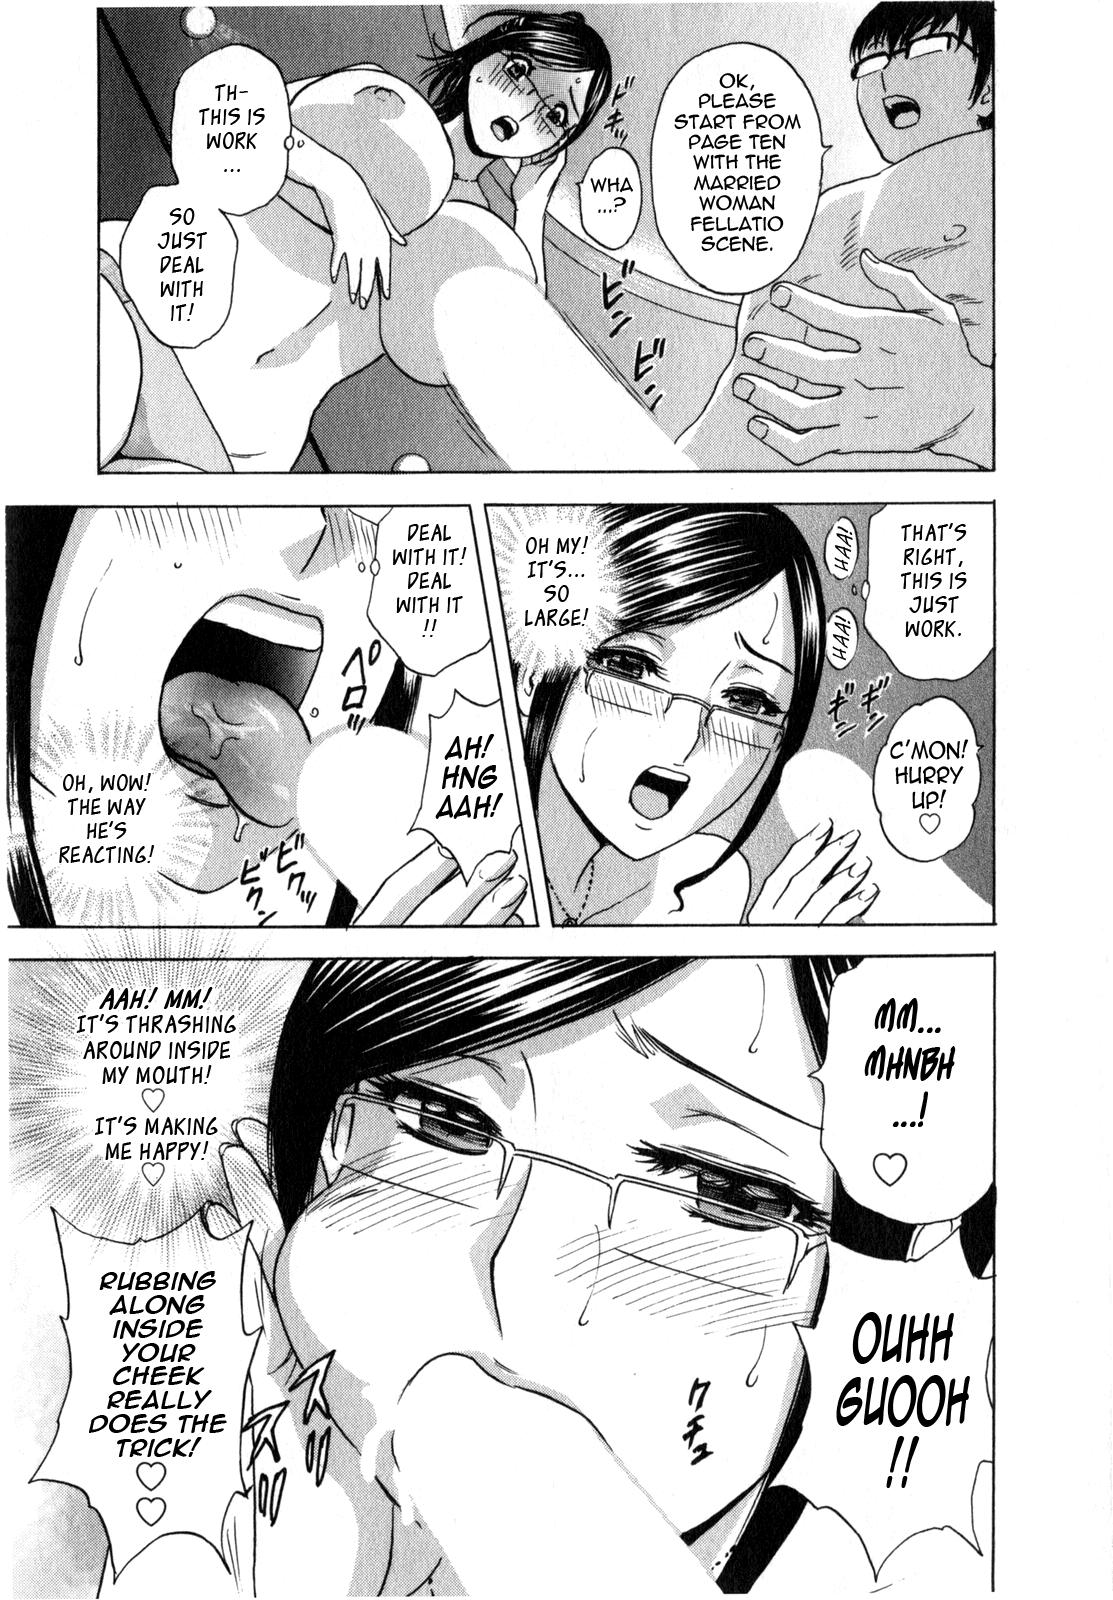 [Hidemaru] Life with Married Women Just Like a Manga 2 - Ch. 1-7 [English] {Tadanohito} 18